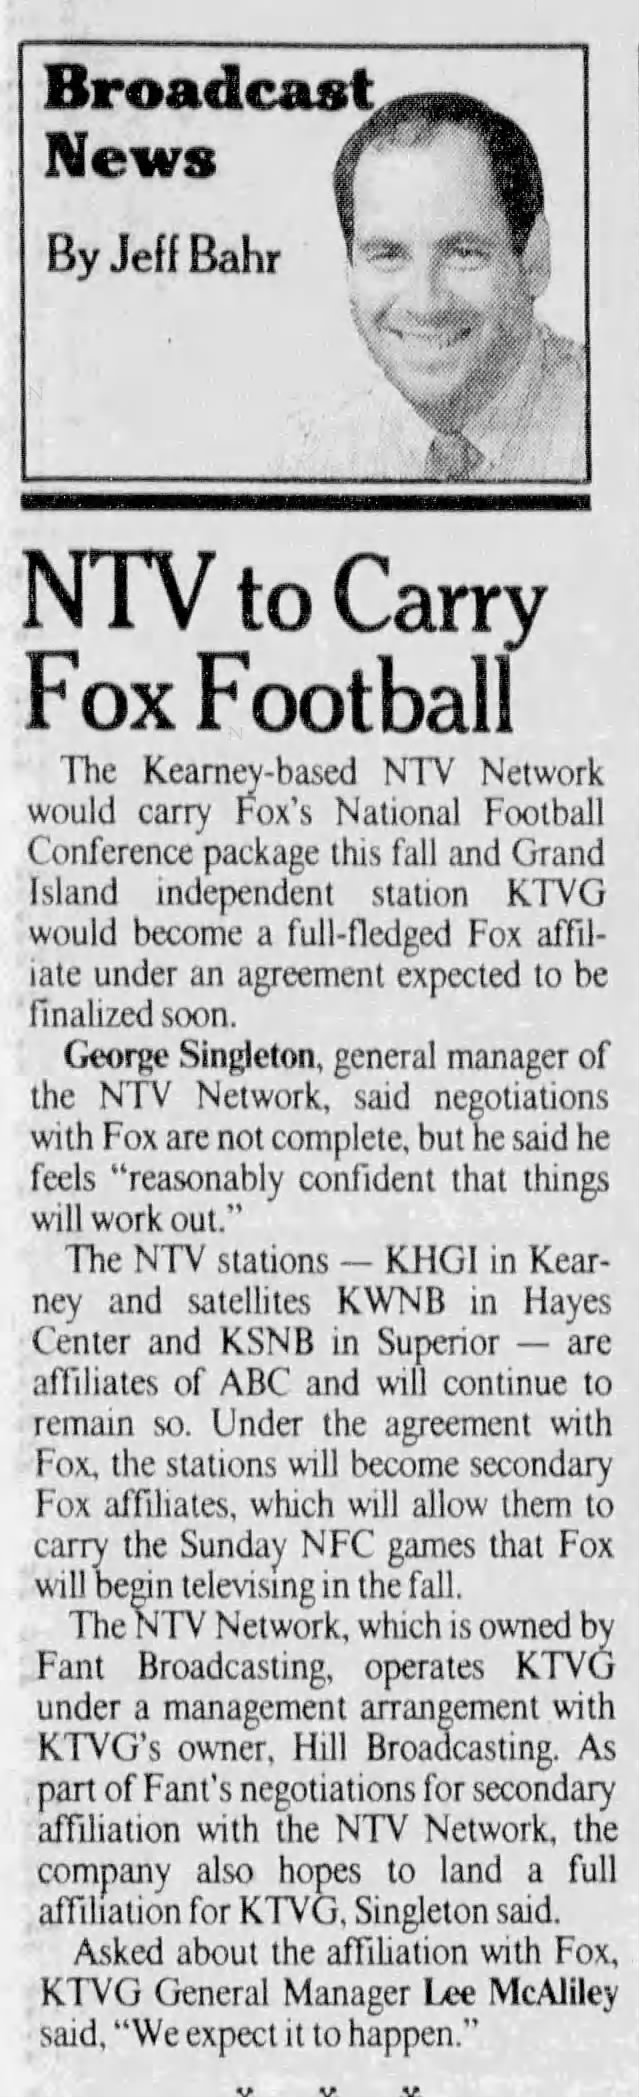 NTV to Carry Fox Football